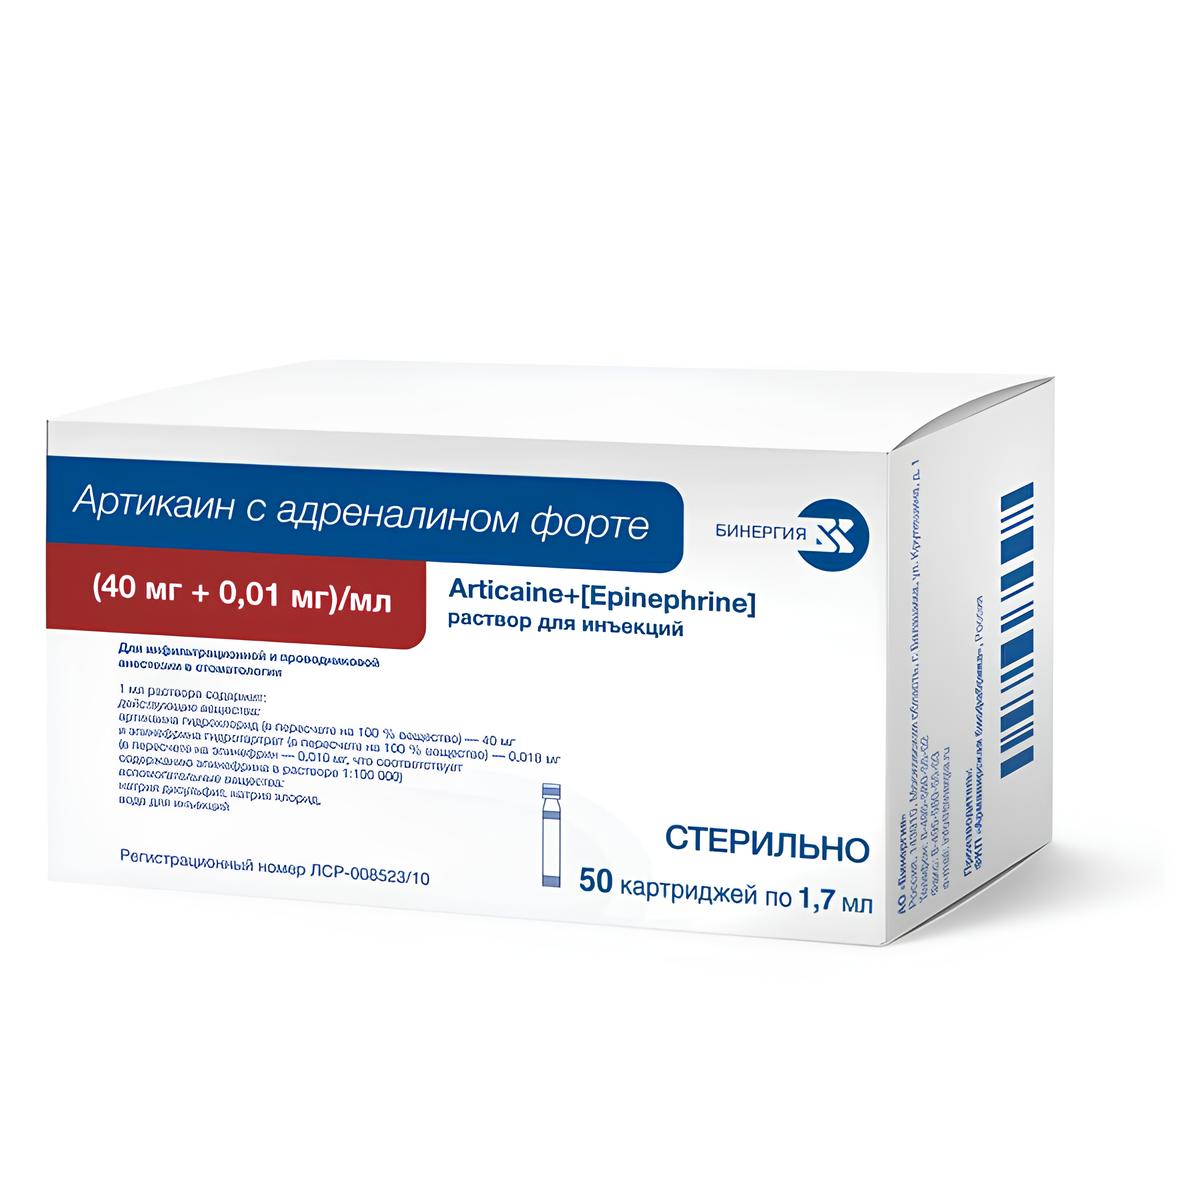 Артикаин c адреналином форте, раствор для инъекций 40 мг+0,01 мг/мл, картриджи 1,7 мл, 50 шт.